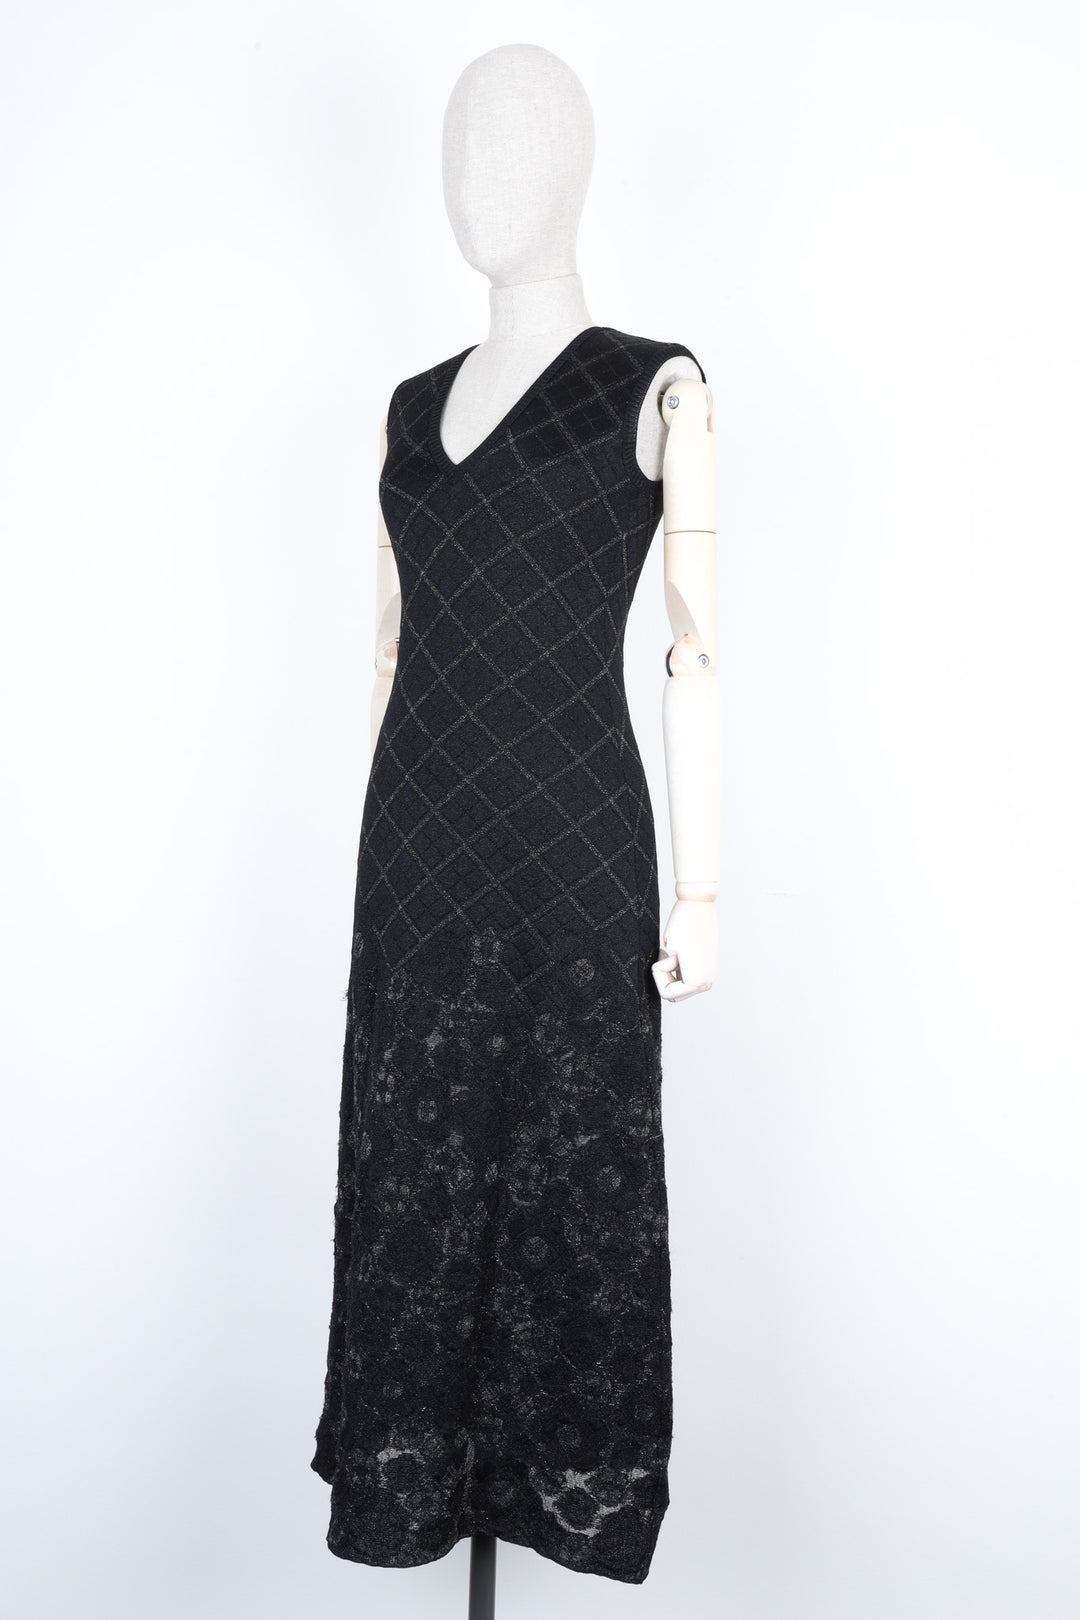 CHANEL Knit Dress Floral Lurex Black